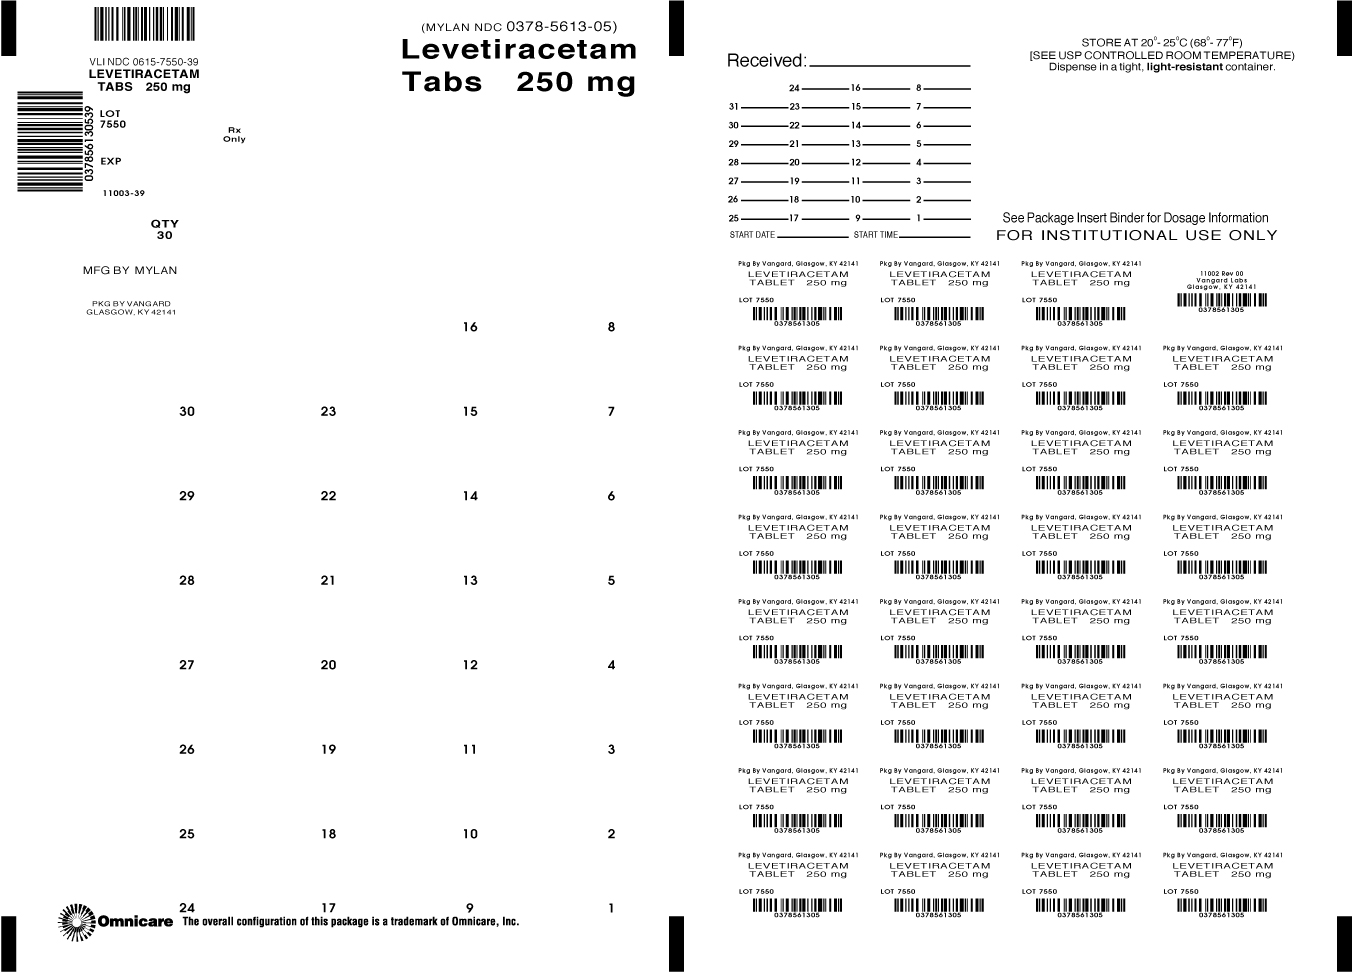 Principal Display Panel-Levetiracetam Tablets, USP 250mg